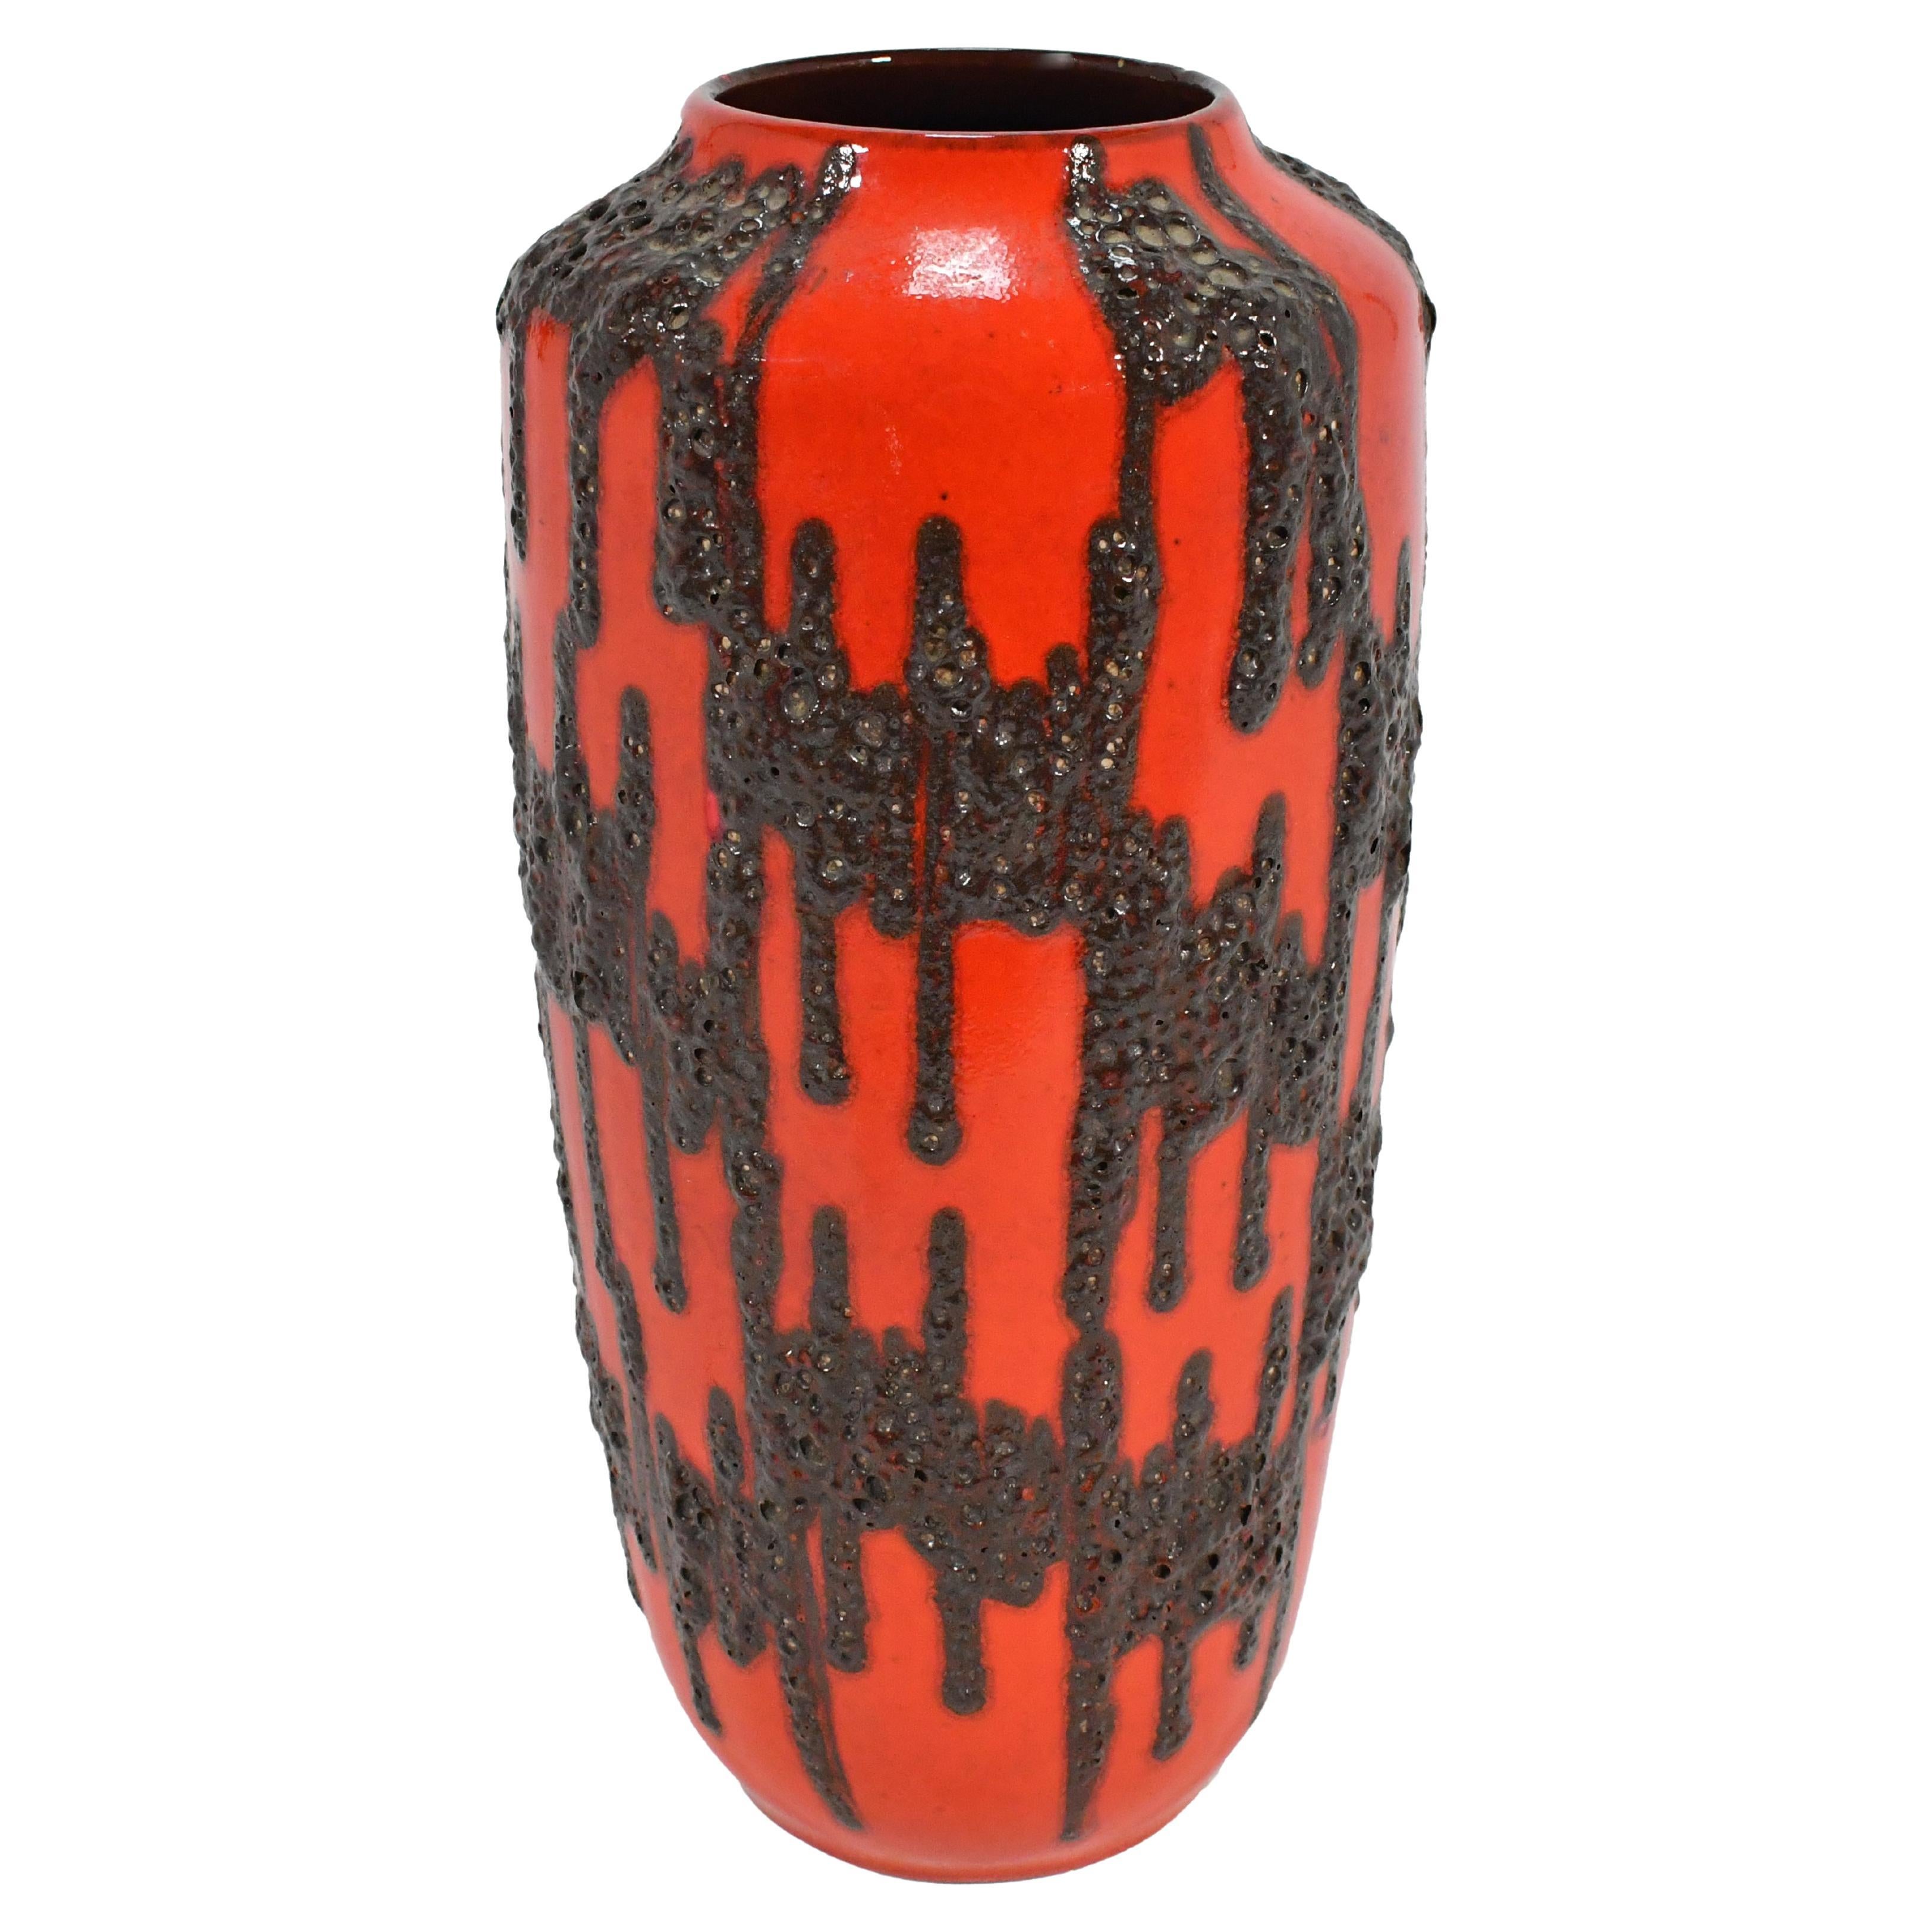 Oversize West German "Fat Lava" Vase